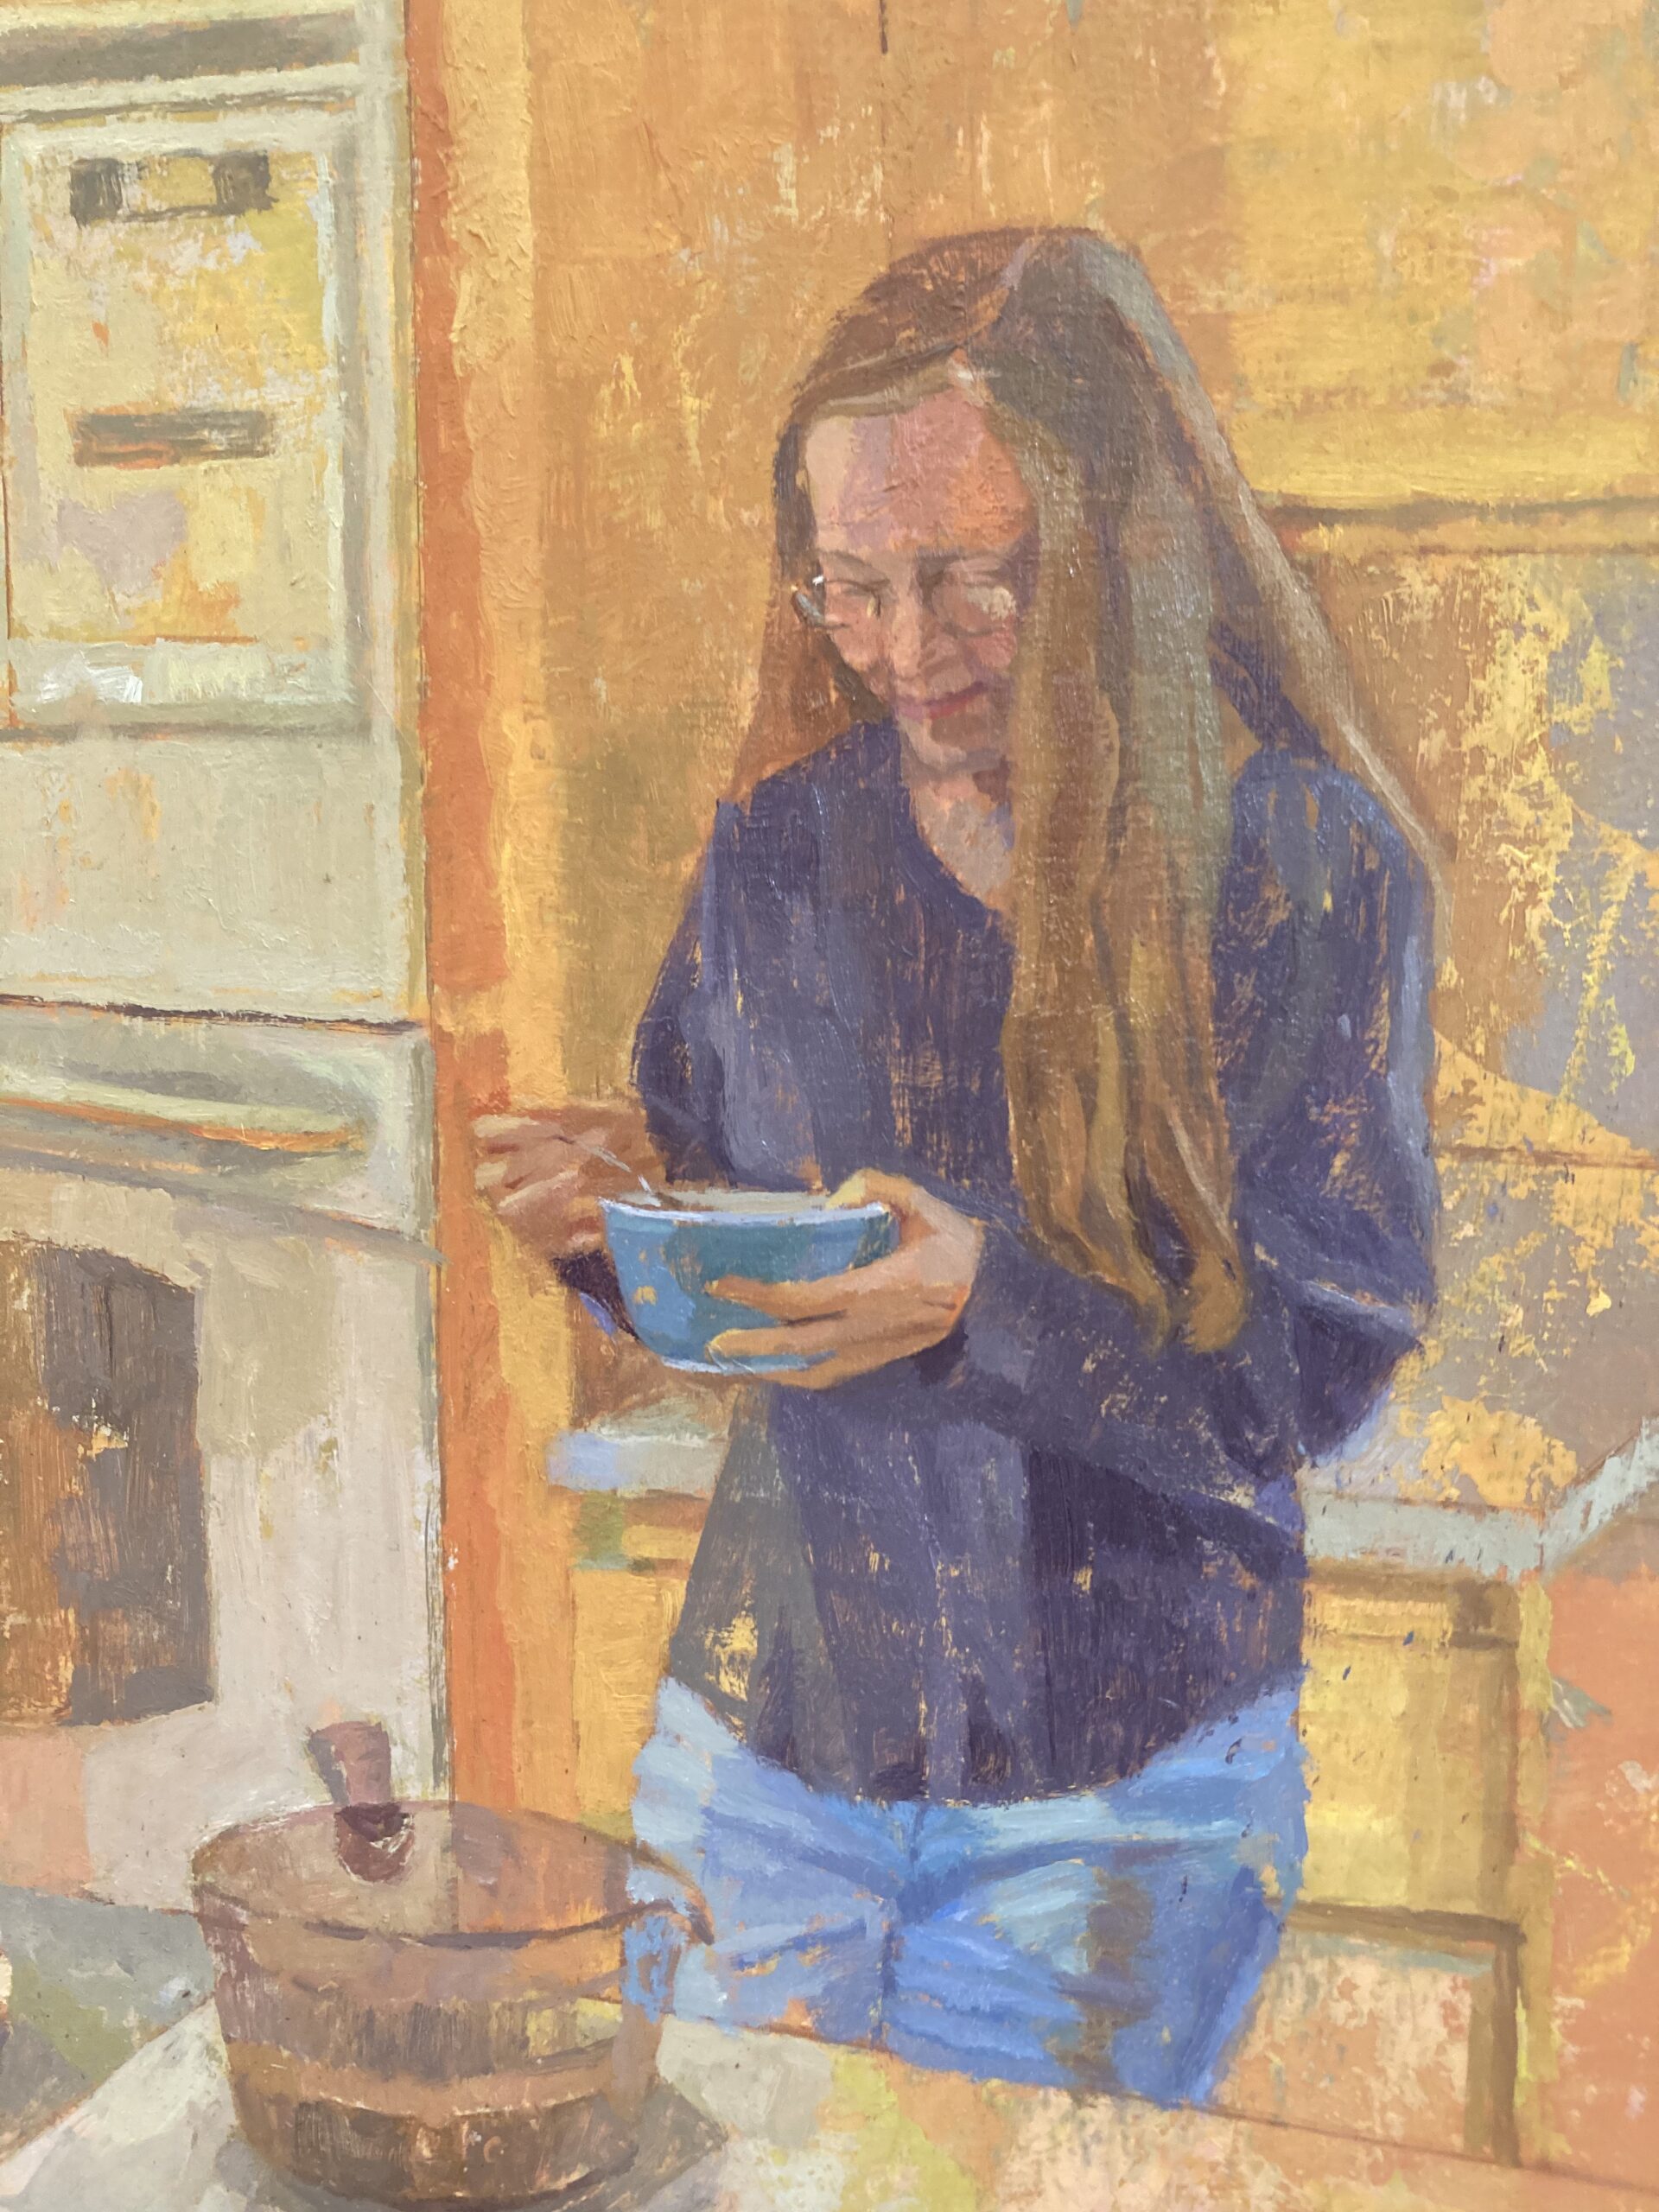 Painted self portrait of Brandy Agun.